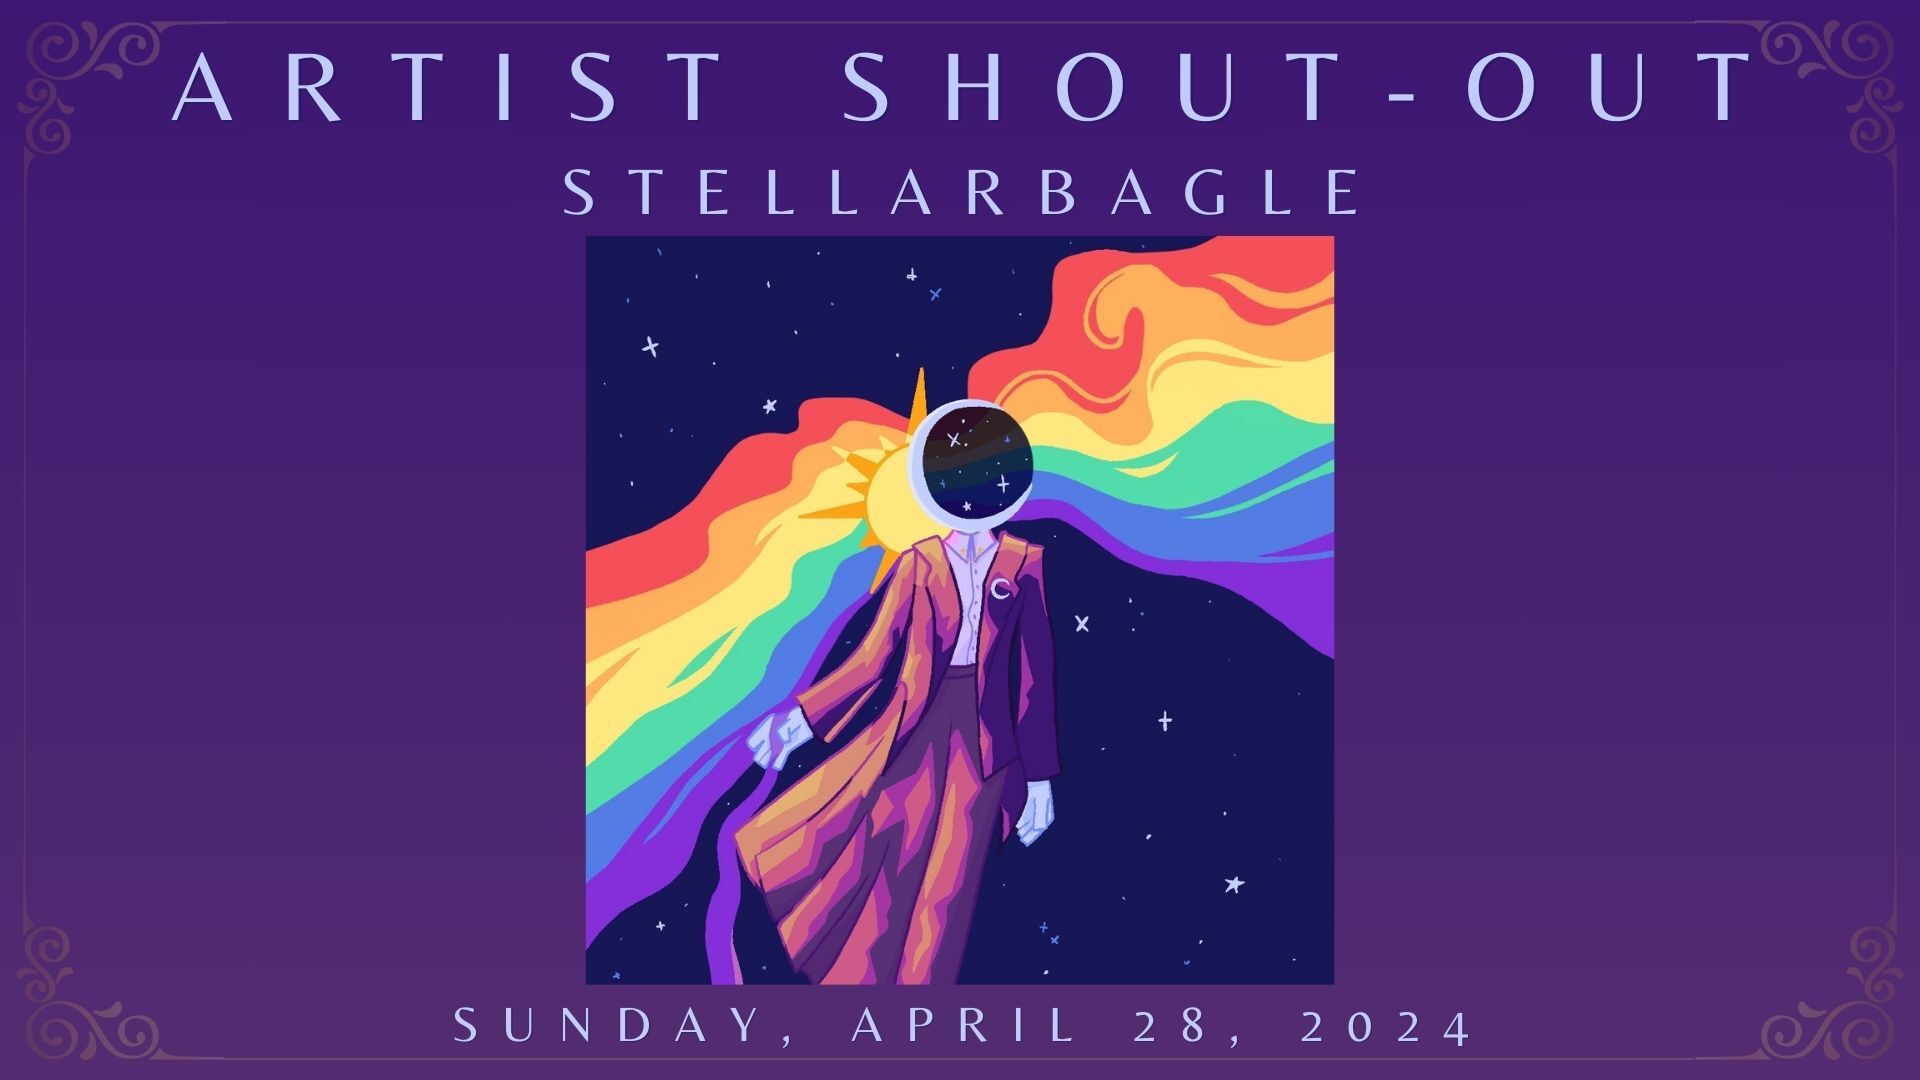 ARTIST SHOUT-OUT: Sunday, April 28, 2024